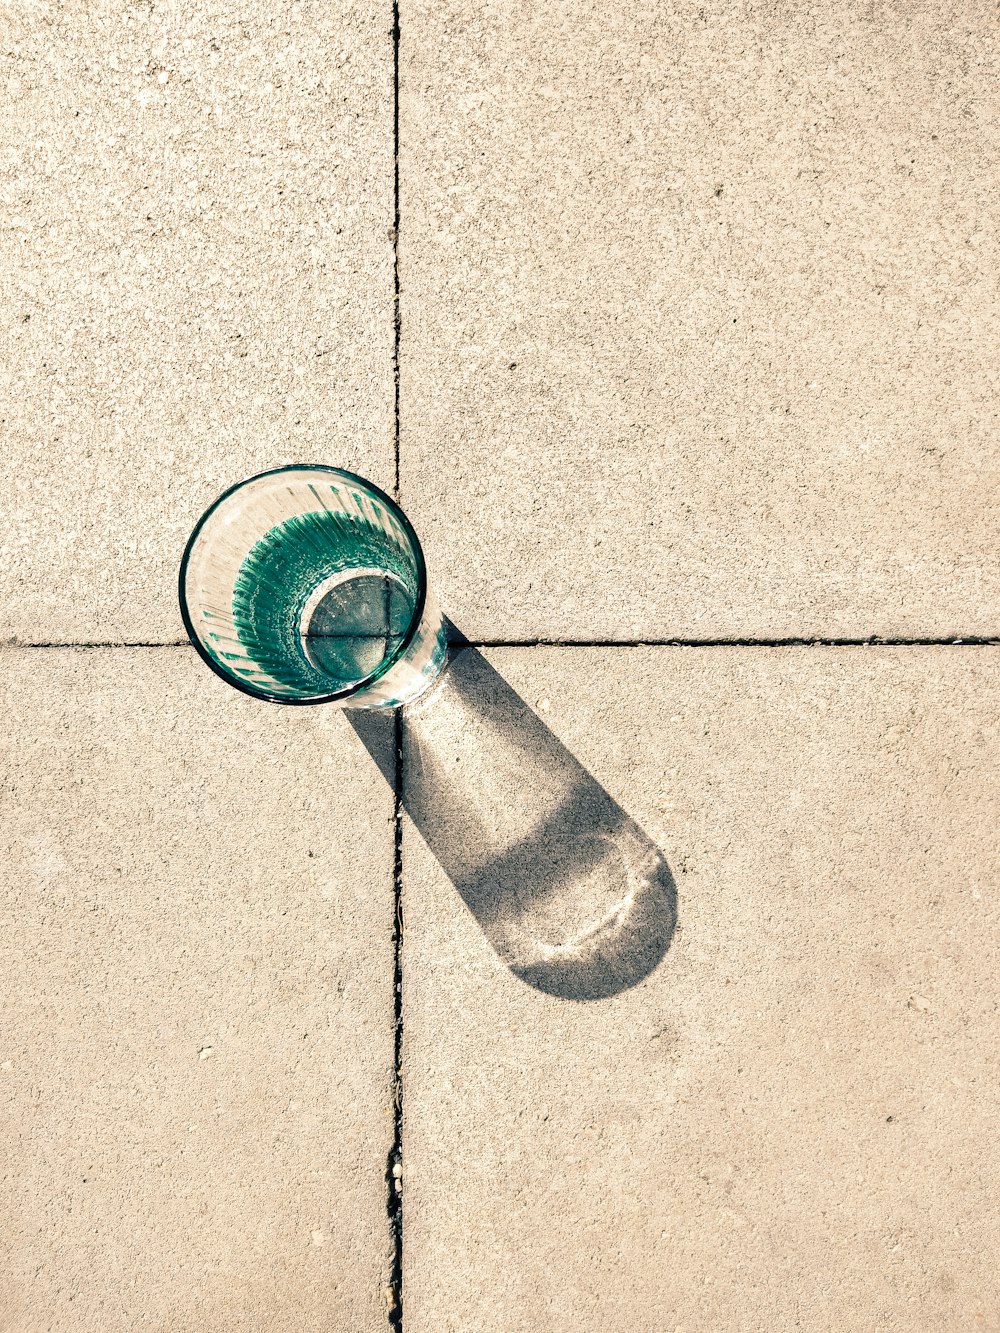 a glass sitting on the ground on a sidewalk